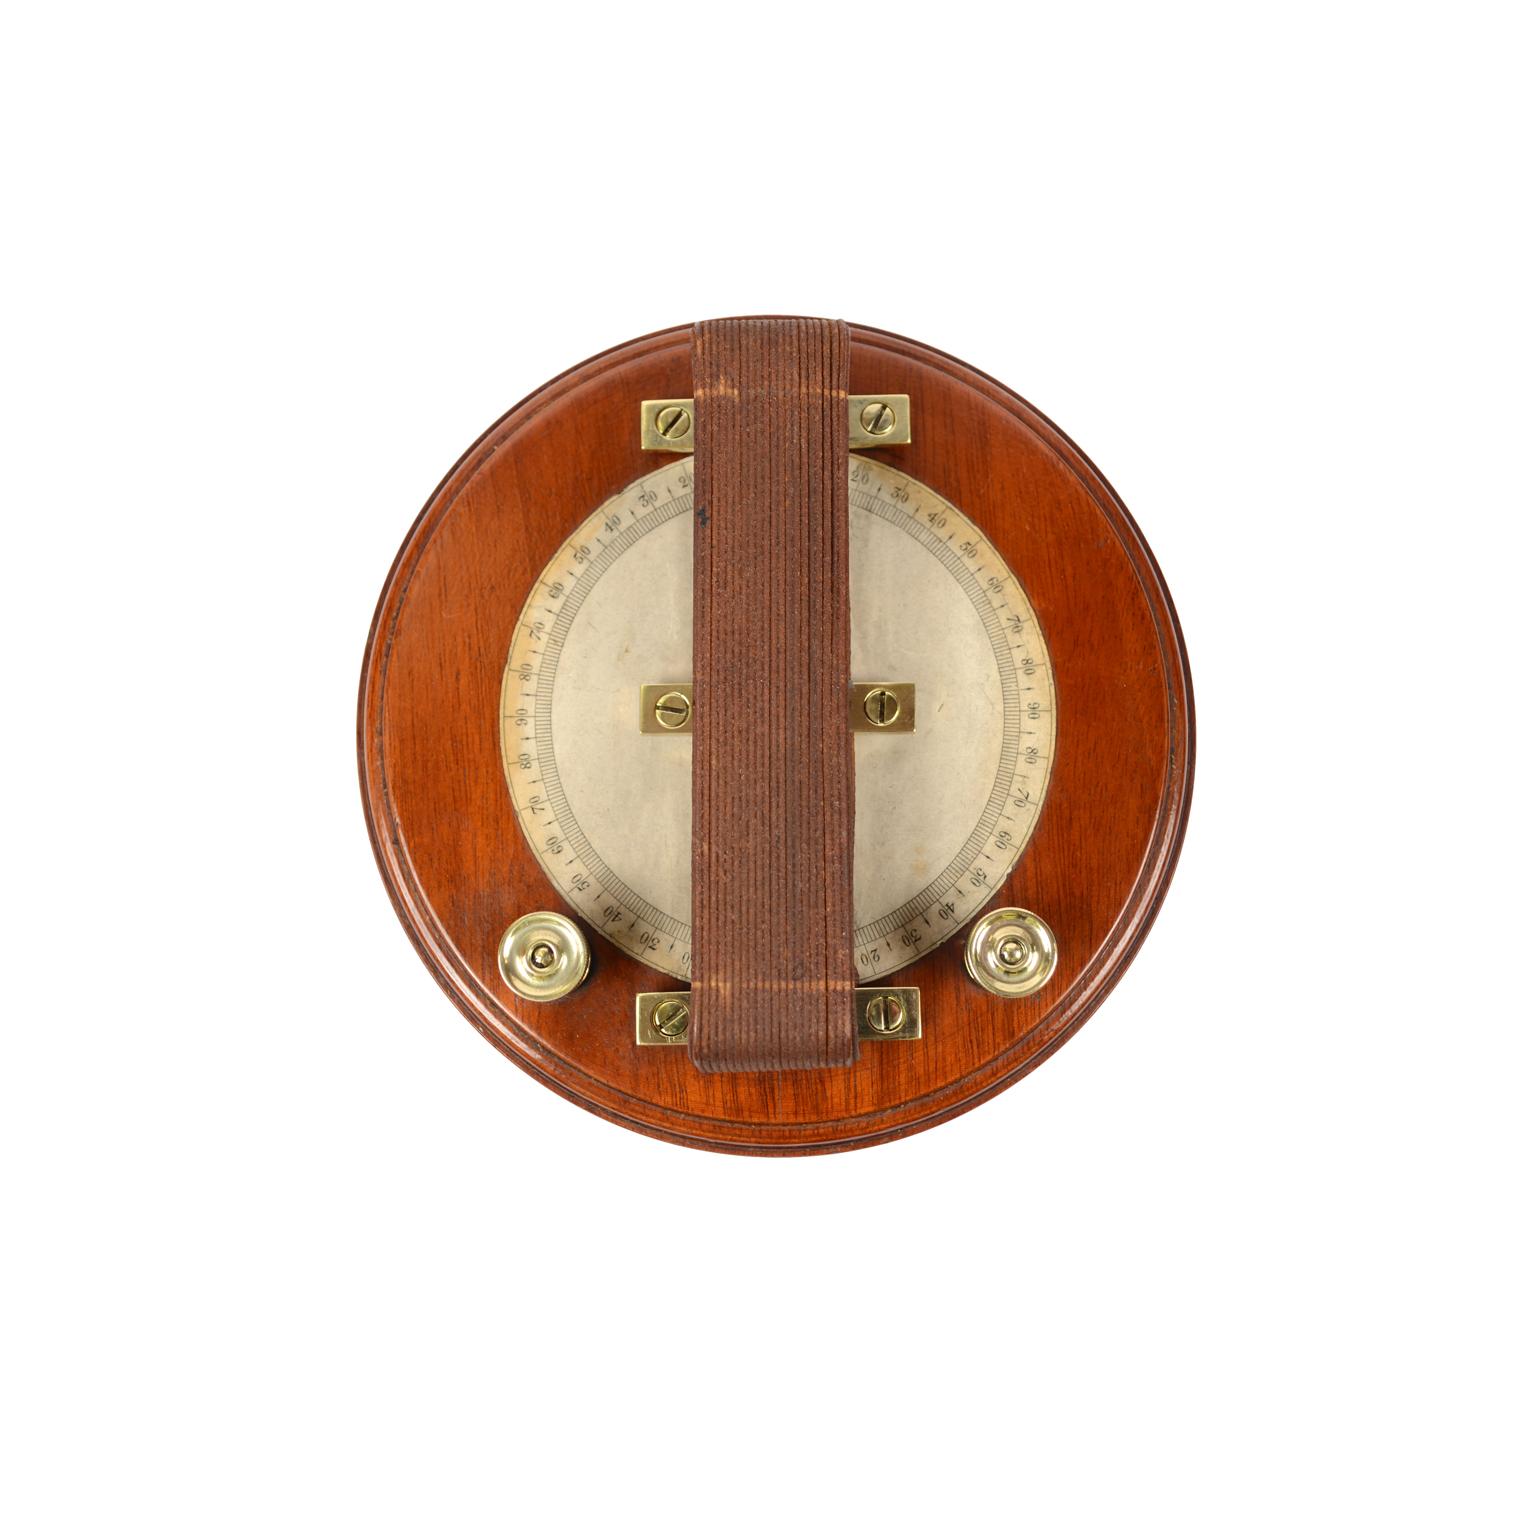 Wooden Galvanometer of the Mid-19th Century